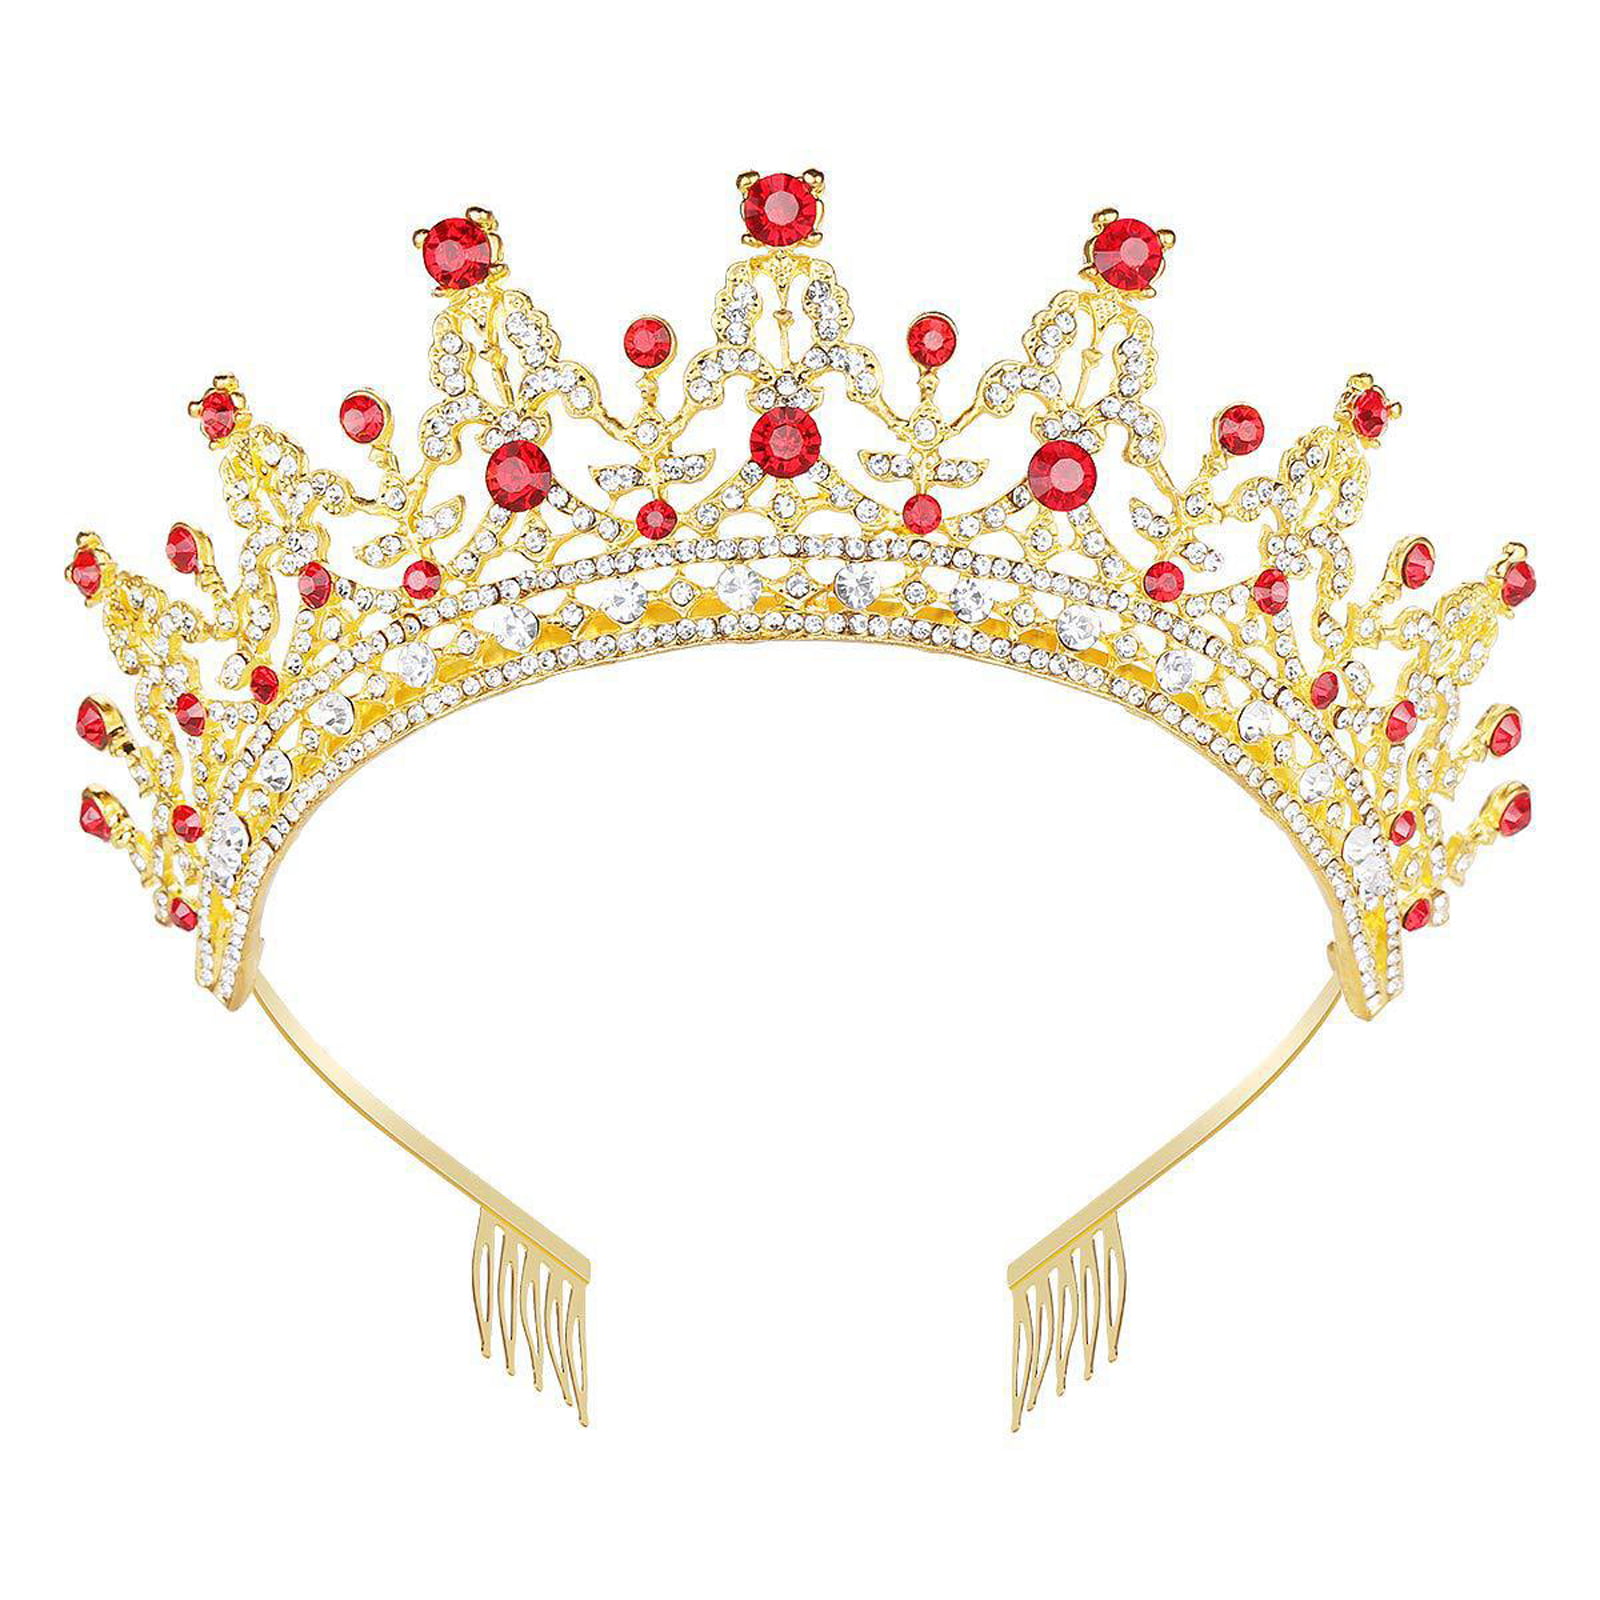 Princess Royal Petite European Rhinestone Crystal Bridal Tiara Crown Silver Tone